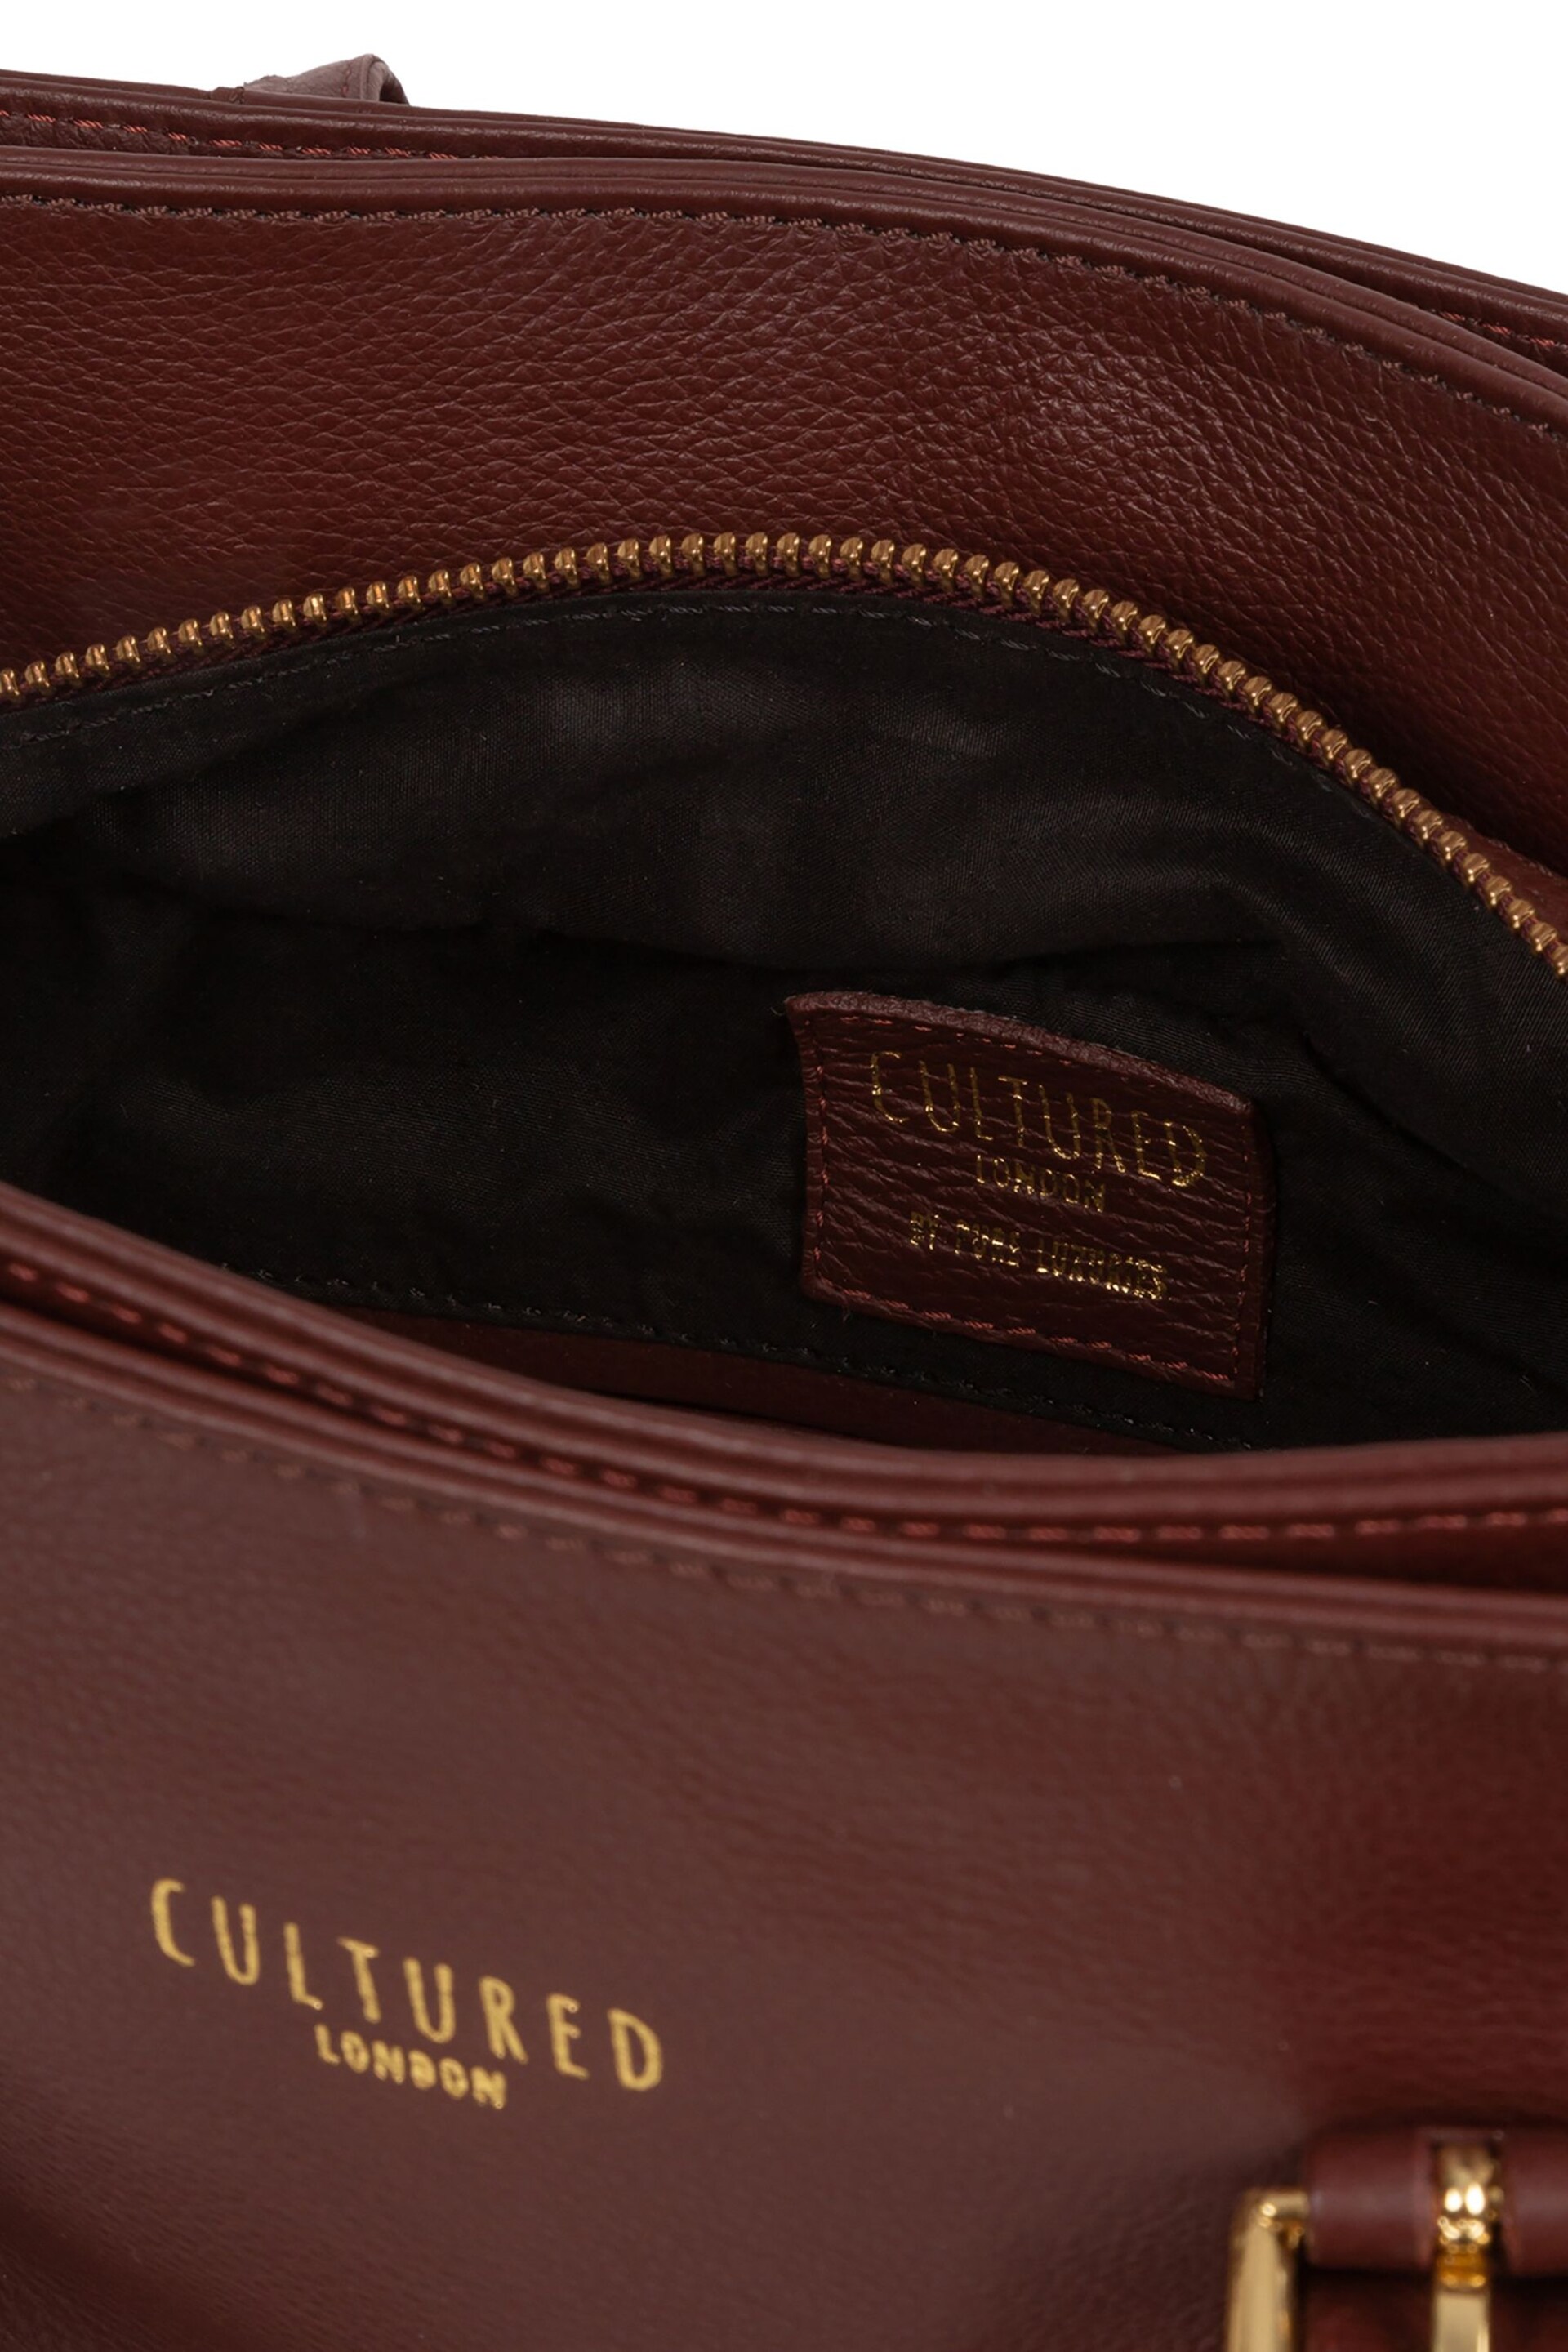 Cultured London Beckenham Leather Handbag - Image 4 of 6